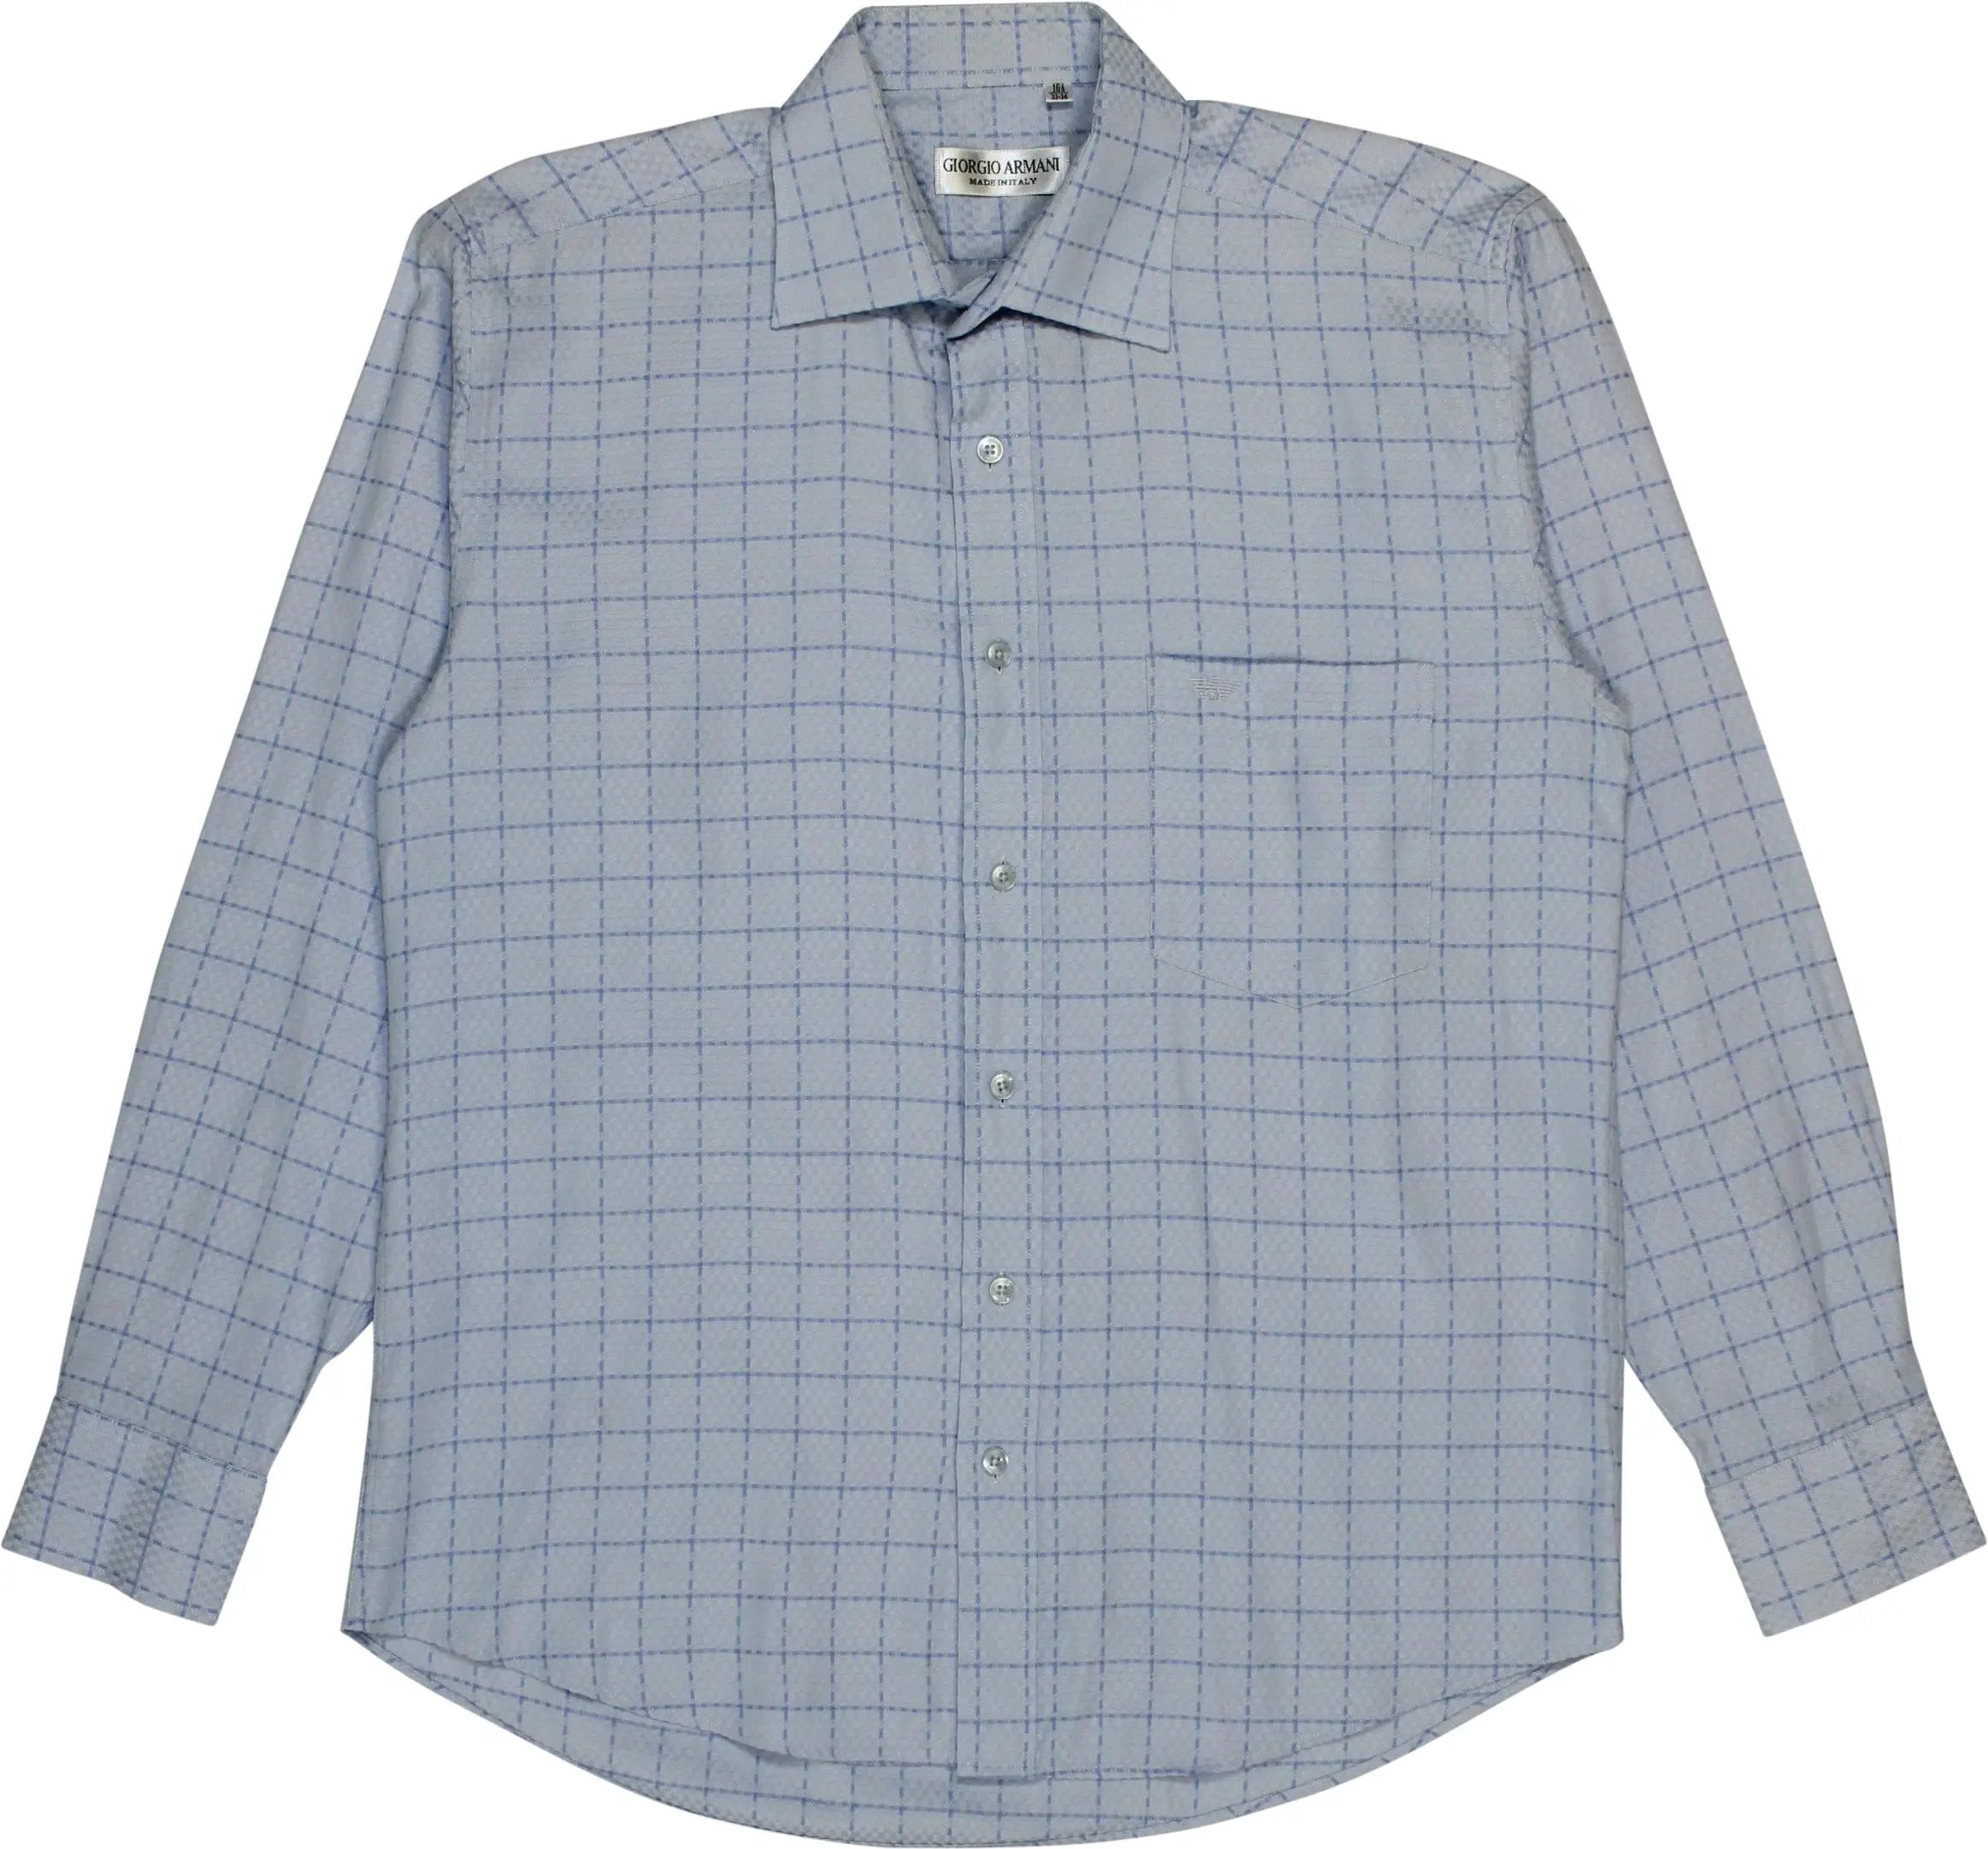 Giorgio Armani - Giorgio Armani Jaquard Shirt- ThriftTale.com - Vintage and second handclothing